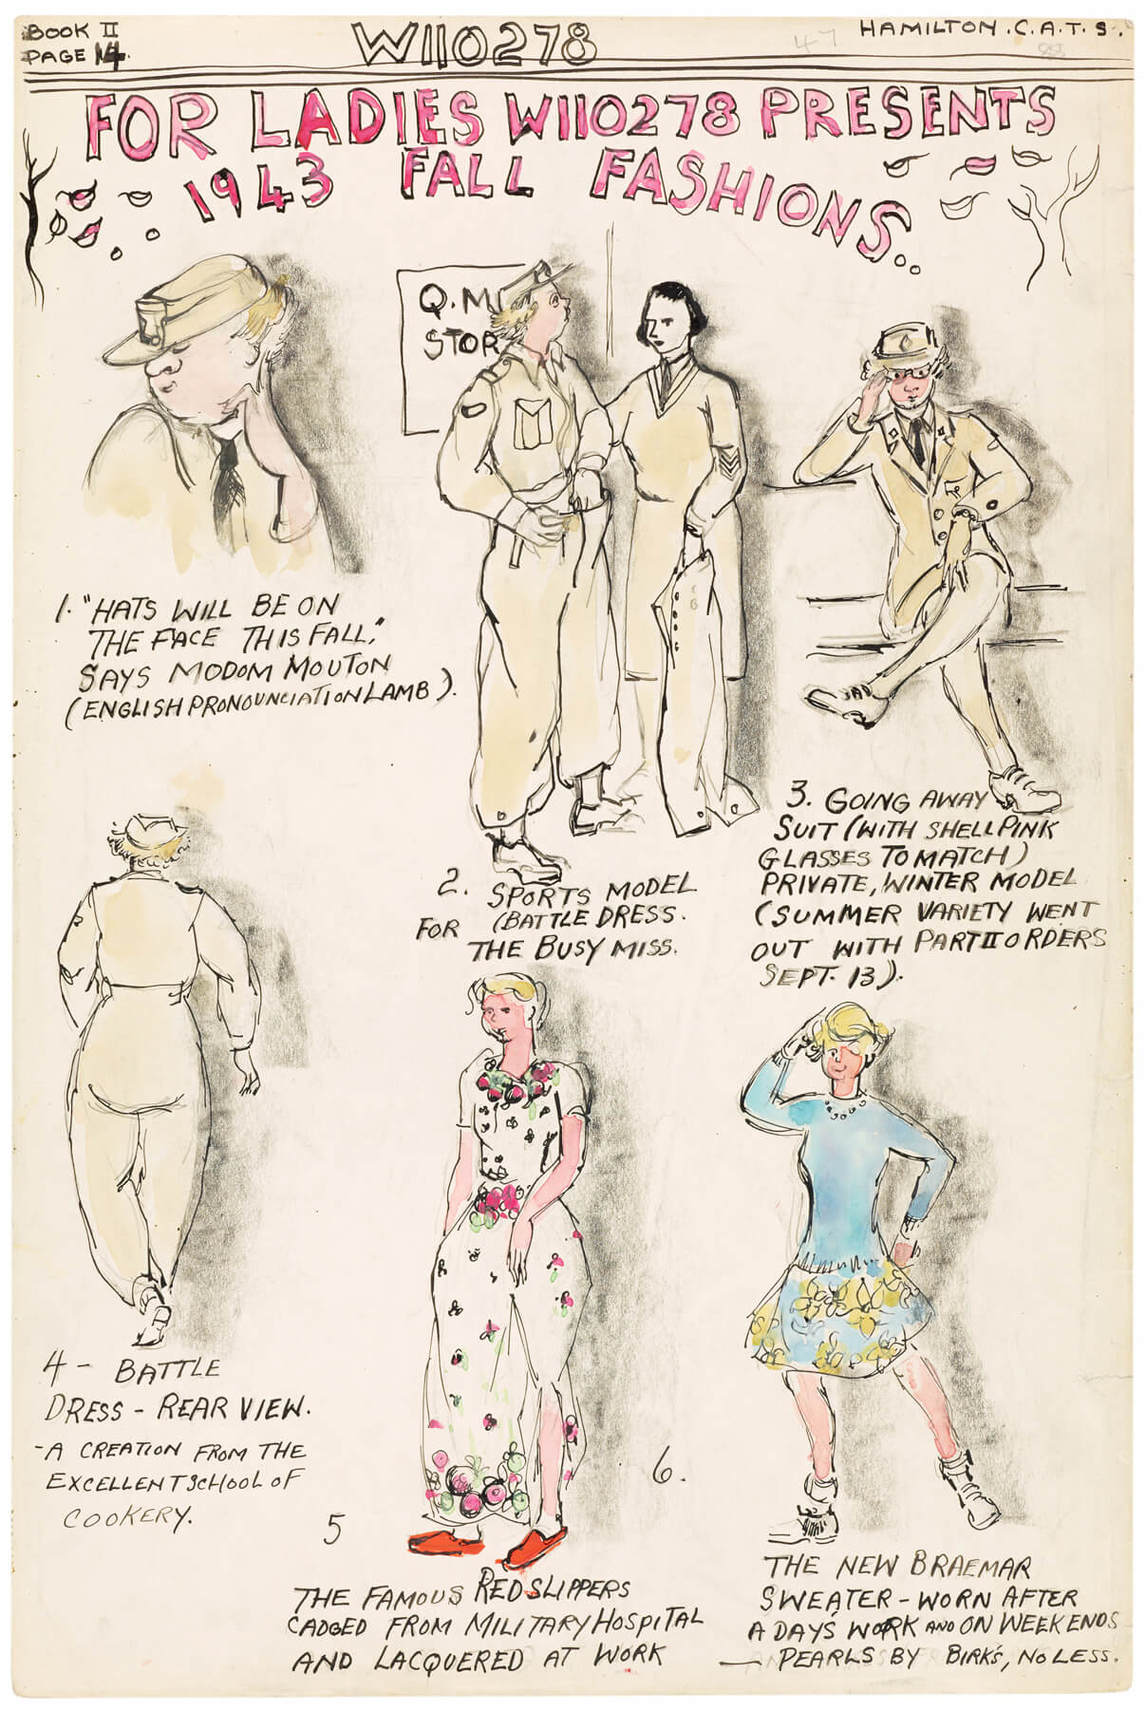 Molly Lamb Bobak, “For Ladies, W110278 Presents 1943 Fall Fashions"